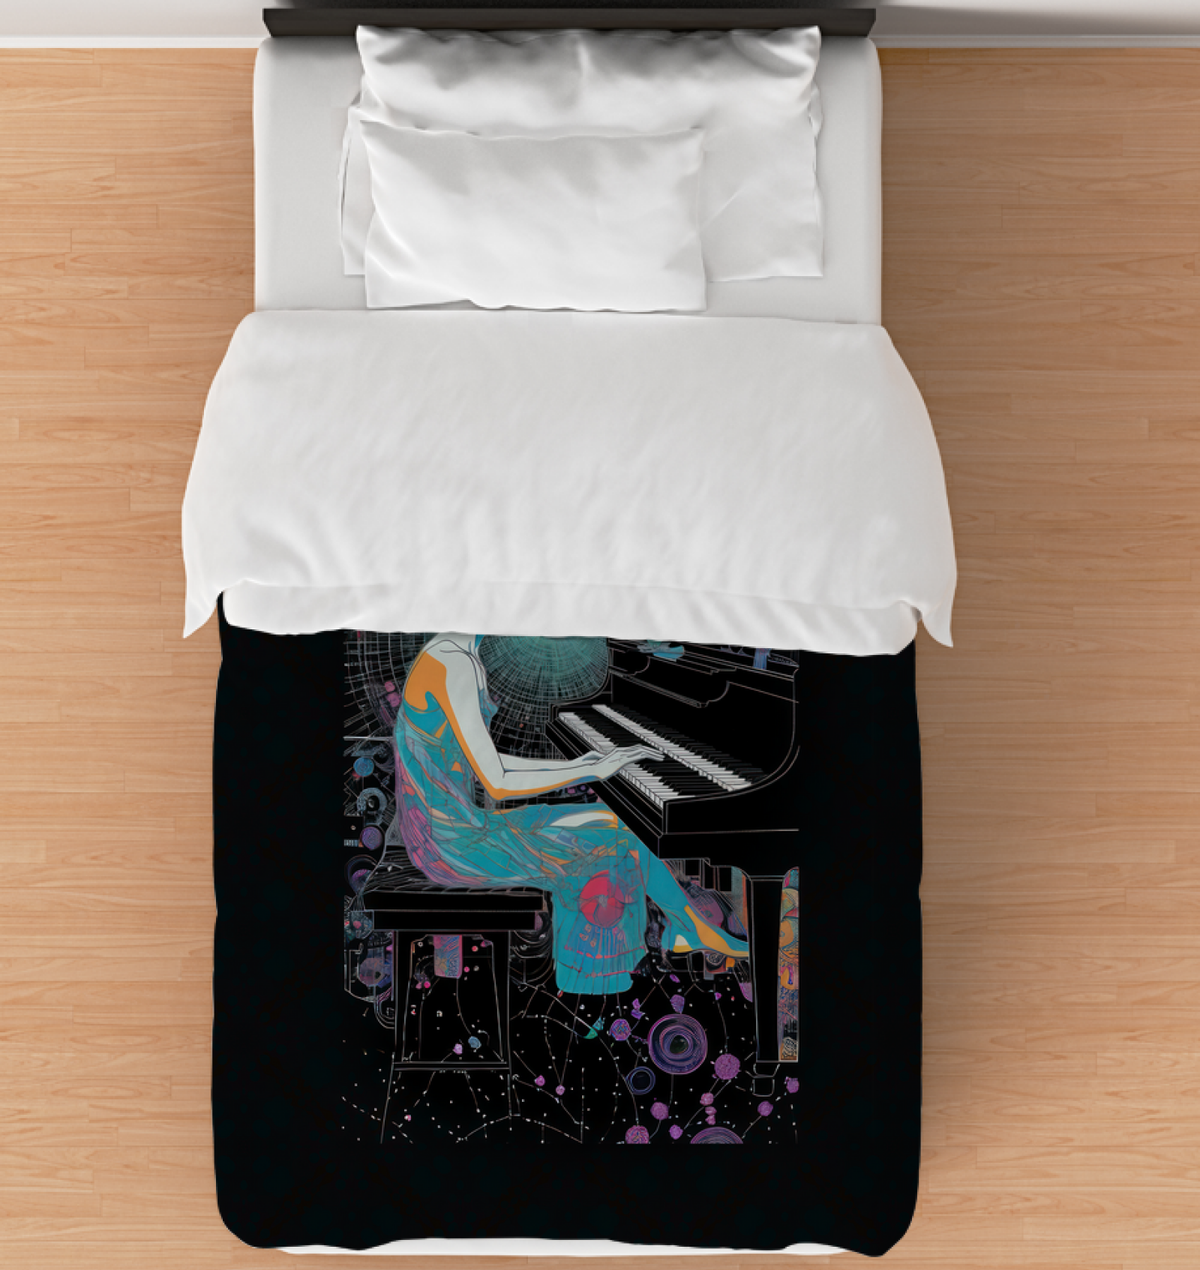 Sunshine Serenade Comforter in a cozy bedroom setting.